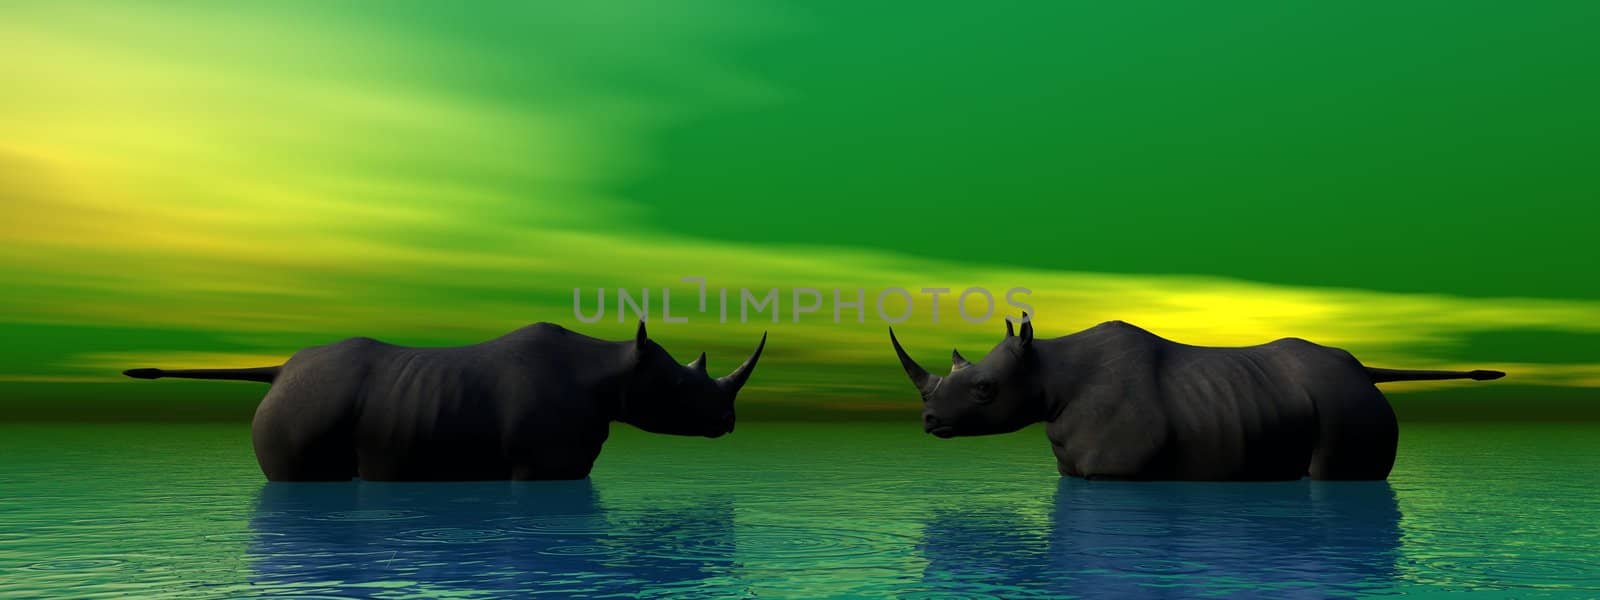 rhinoceros and sky green